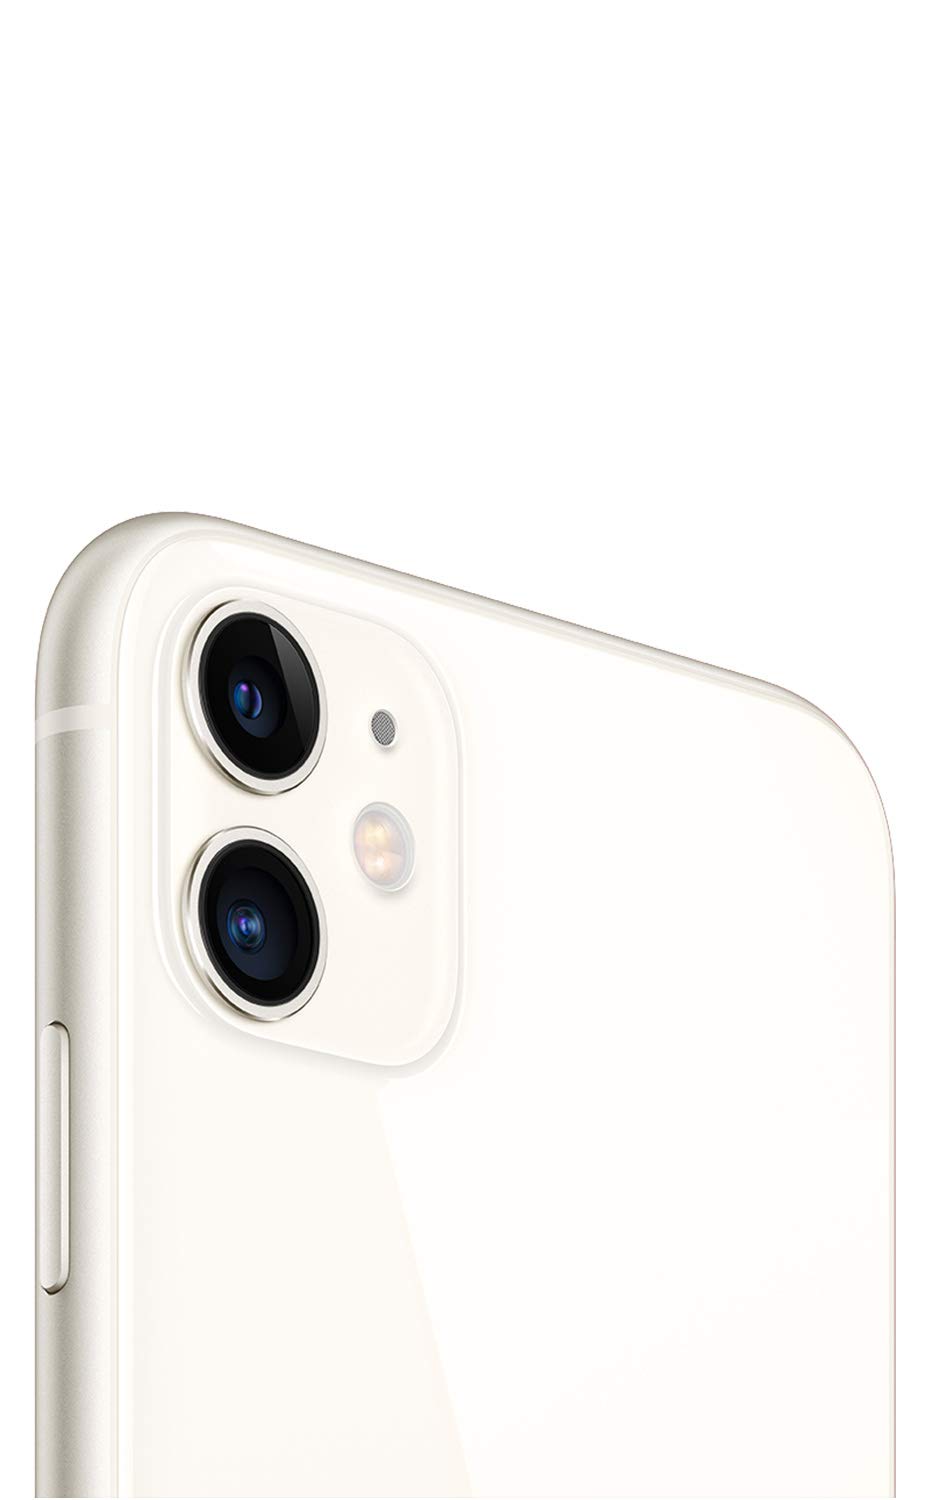 Apple iPhone 11, 64GB, White - Unlocked (Renewed Premium)